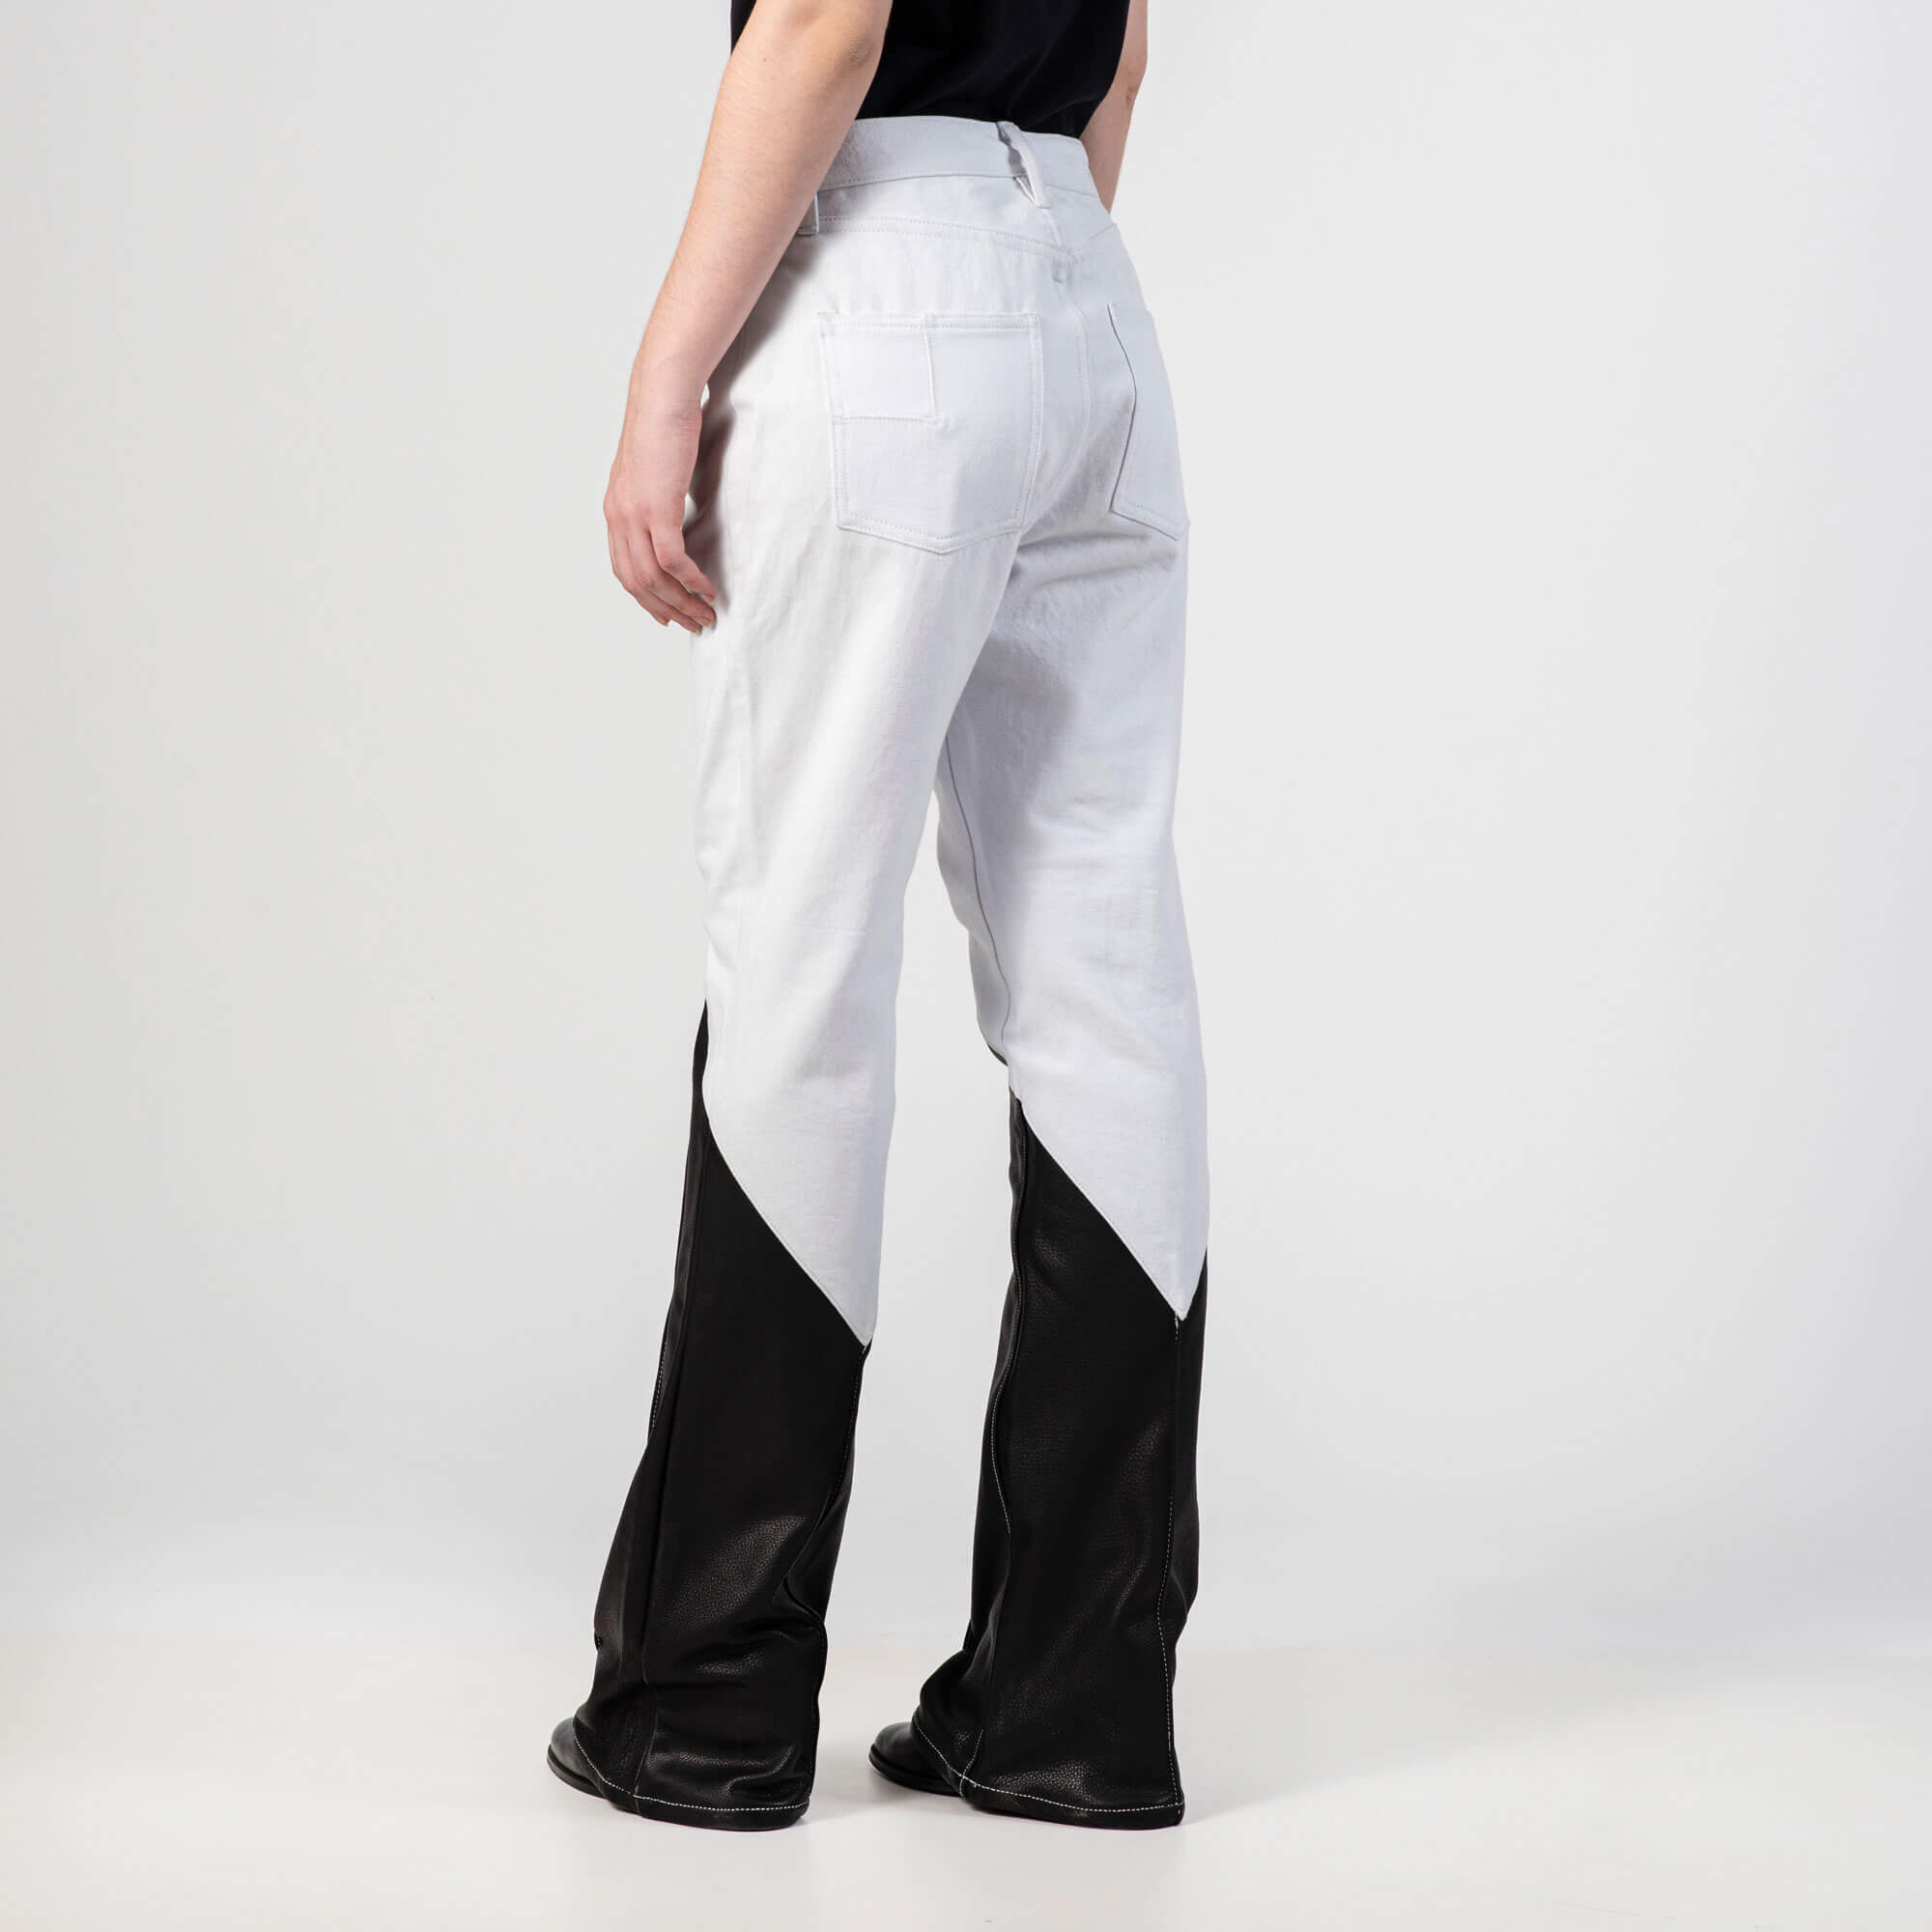 Model F Denim Leather Pant